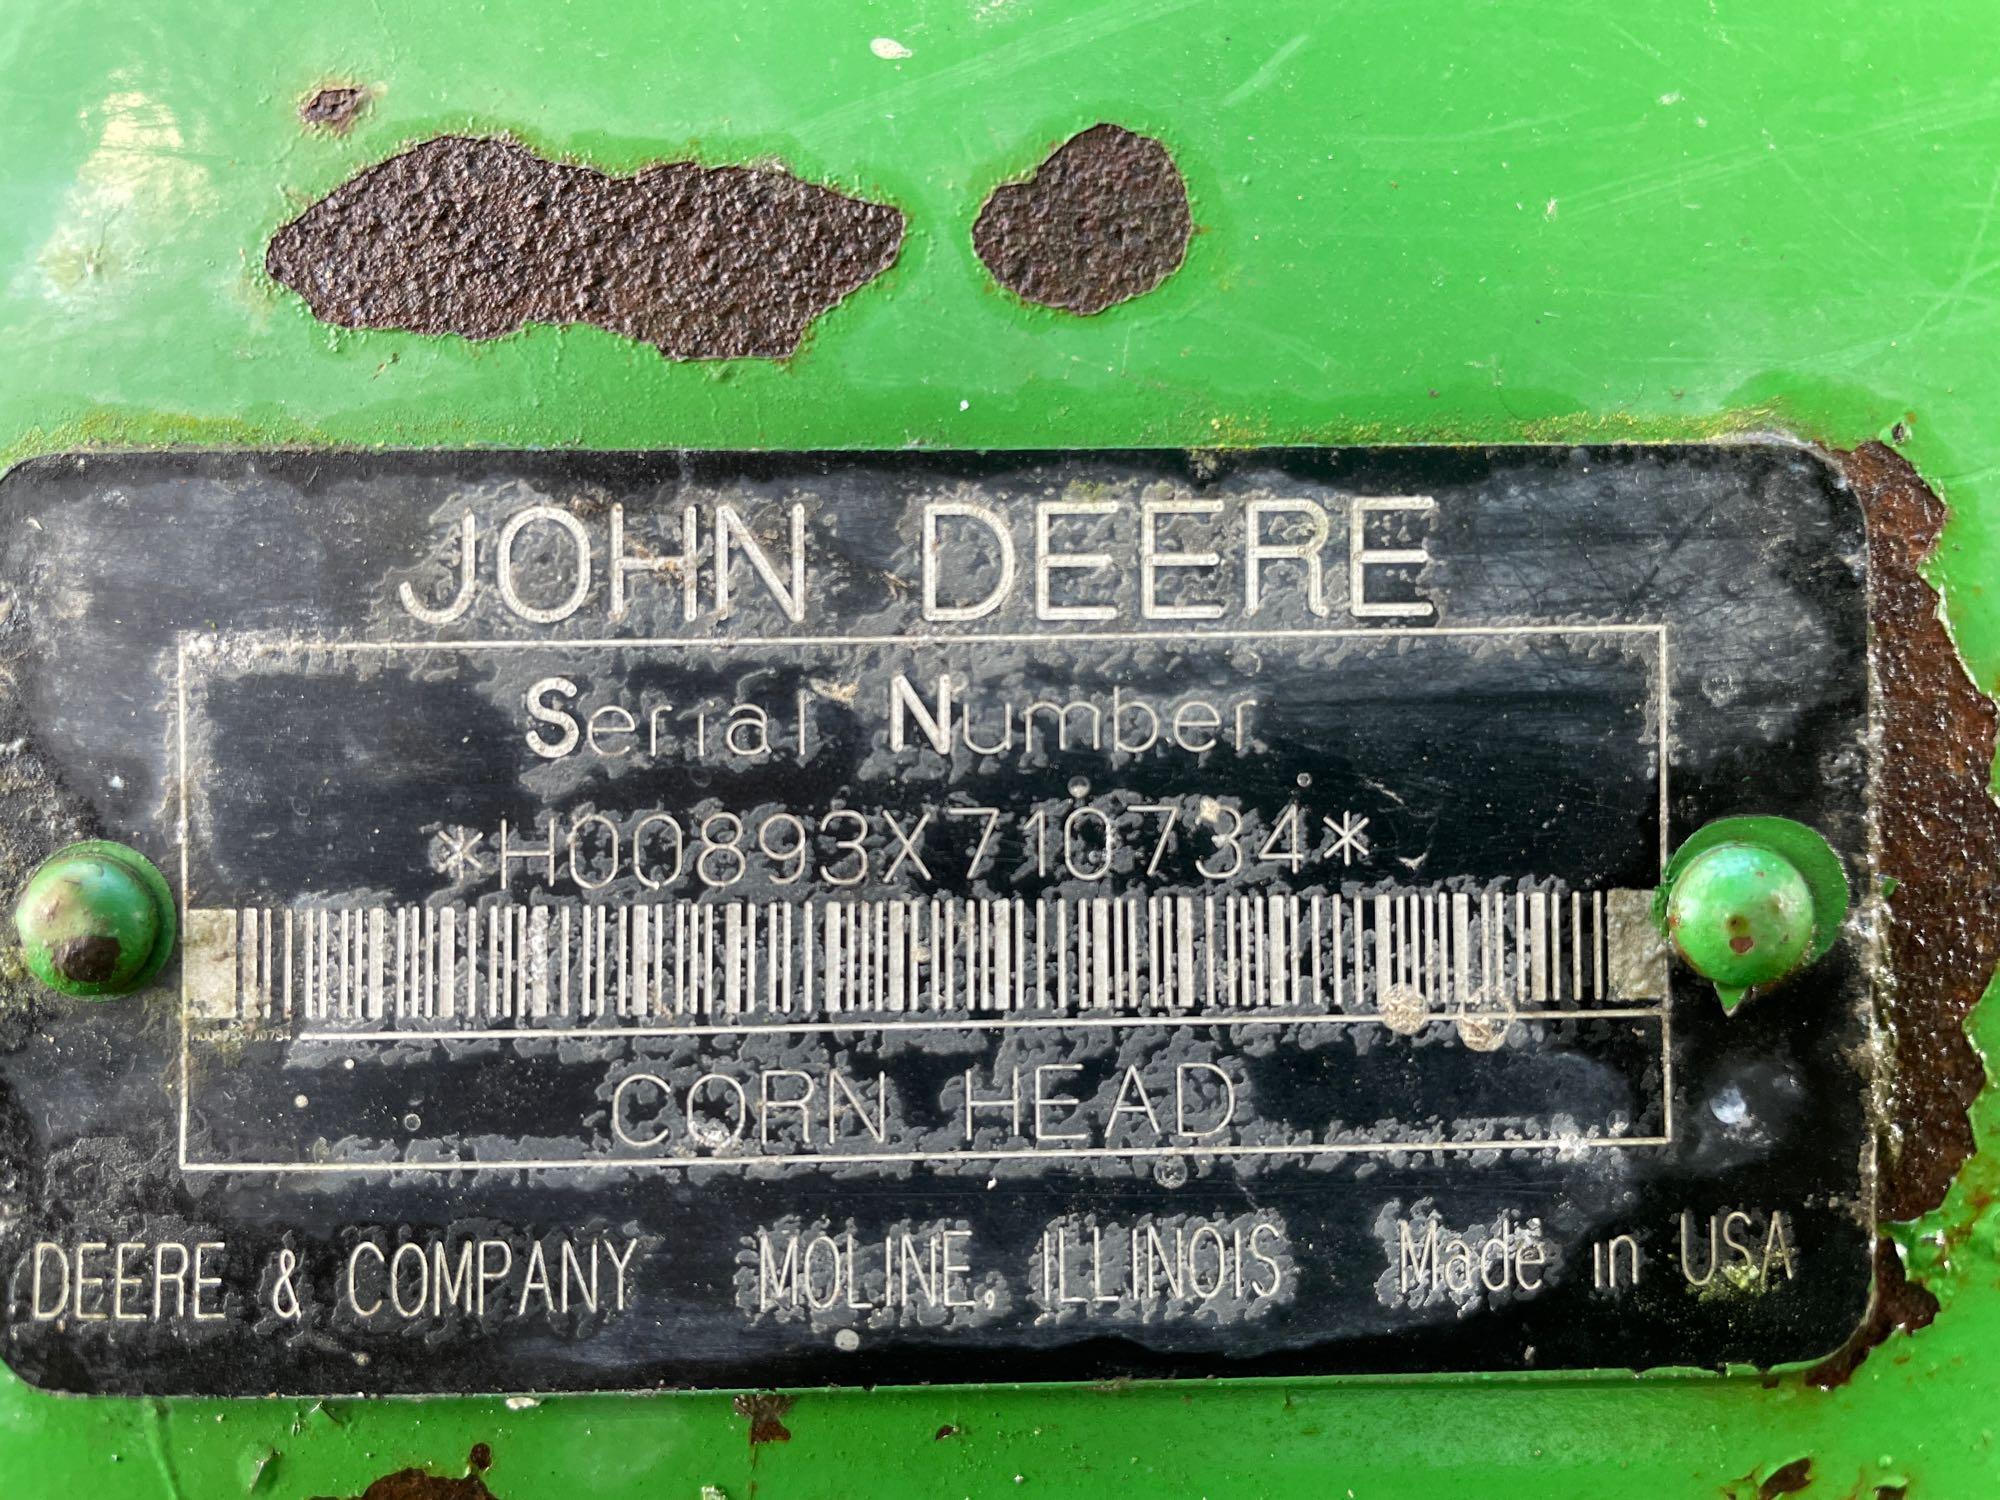 2005 John Deere mod 893 8row corn head